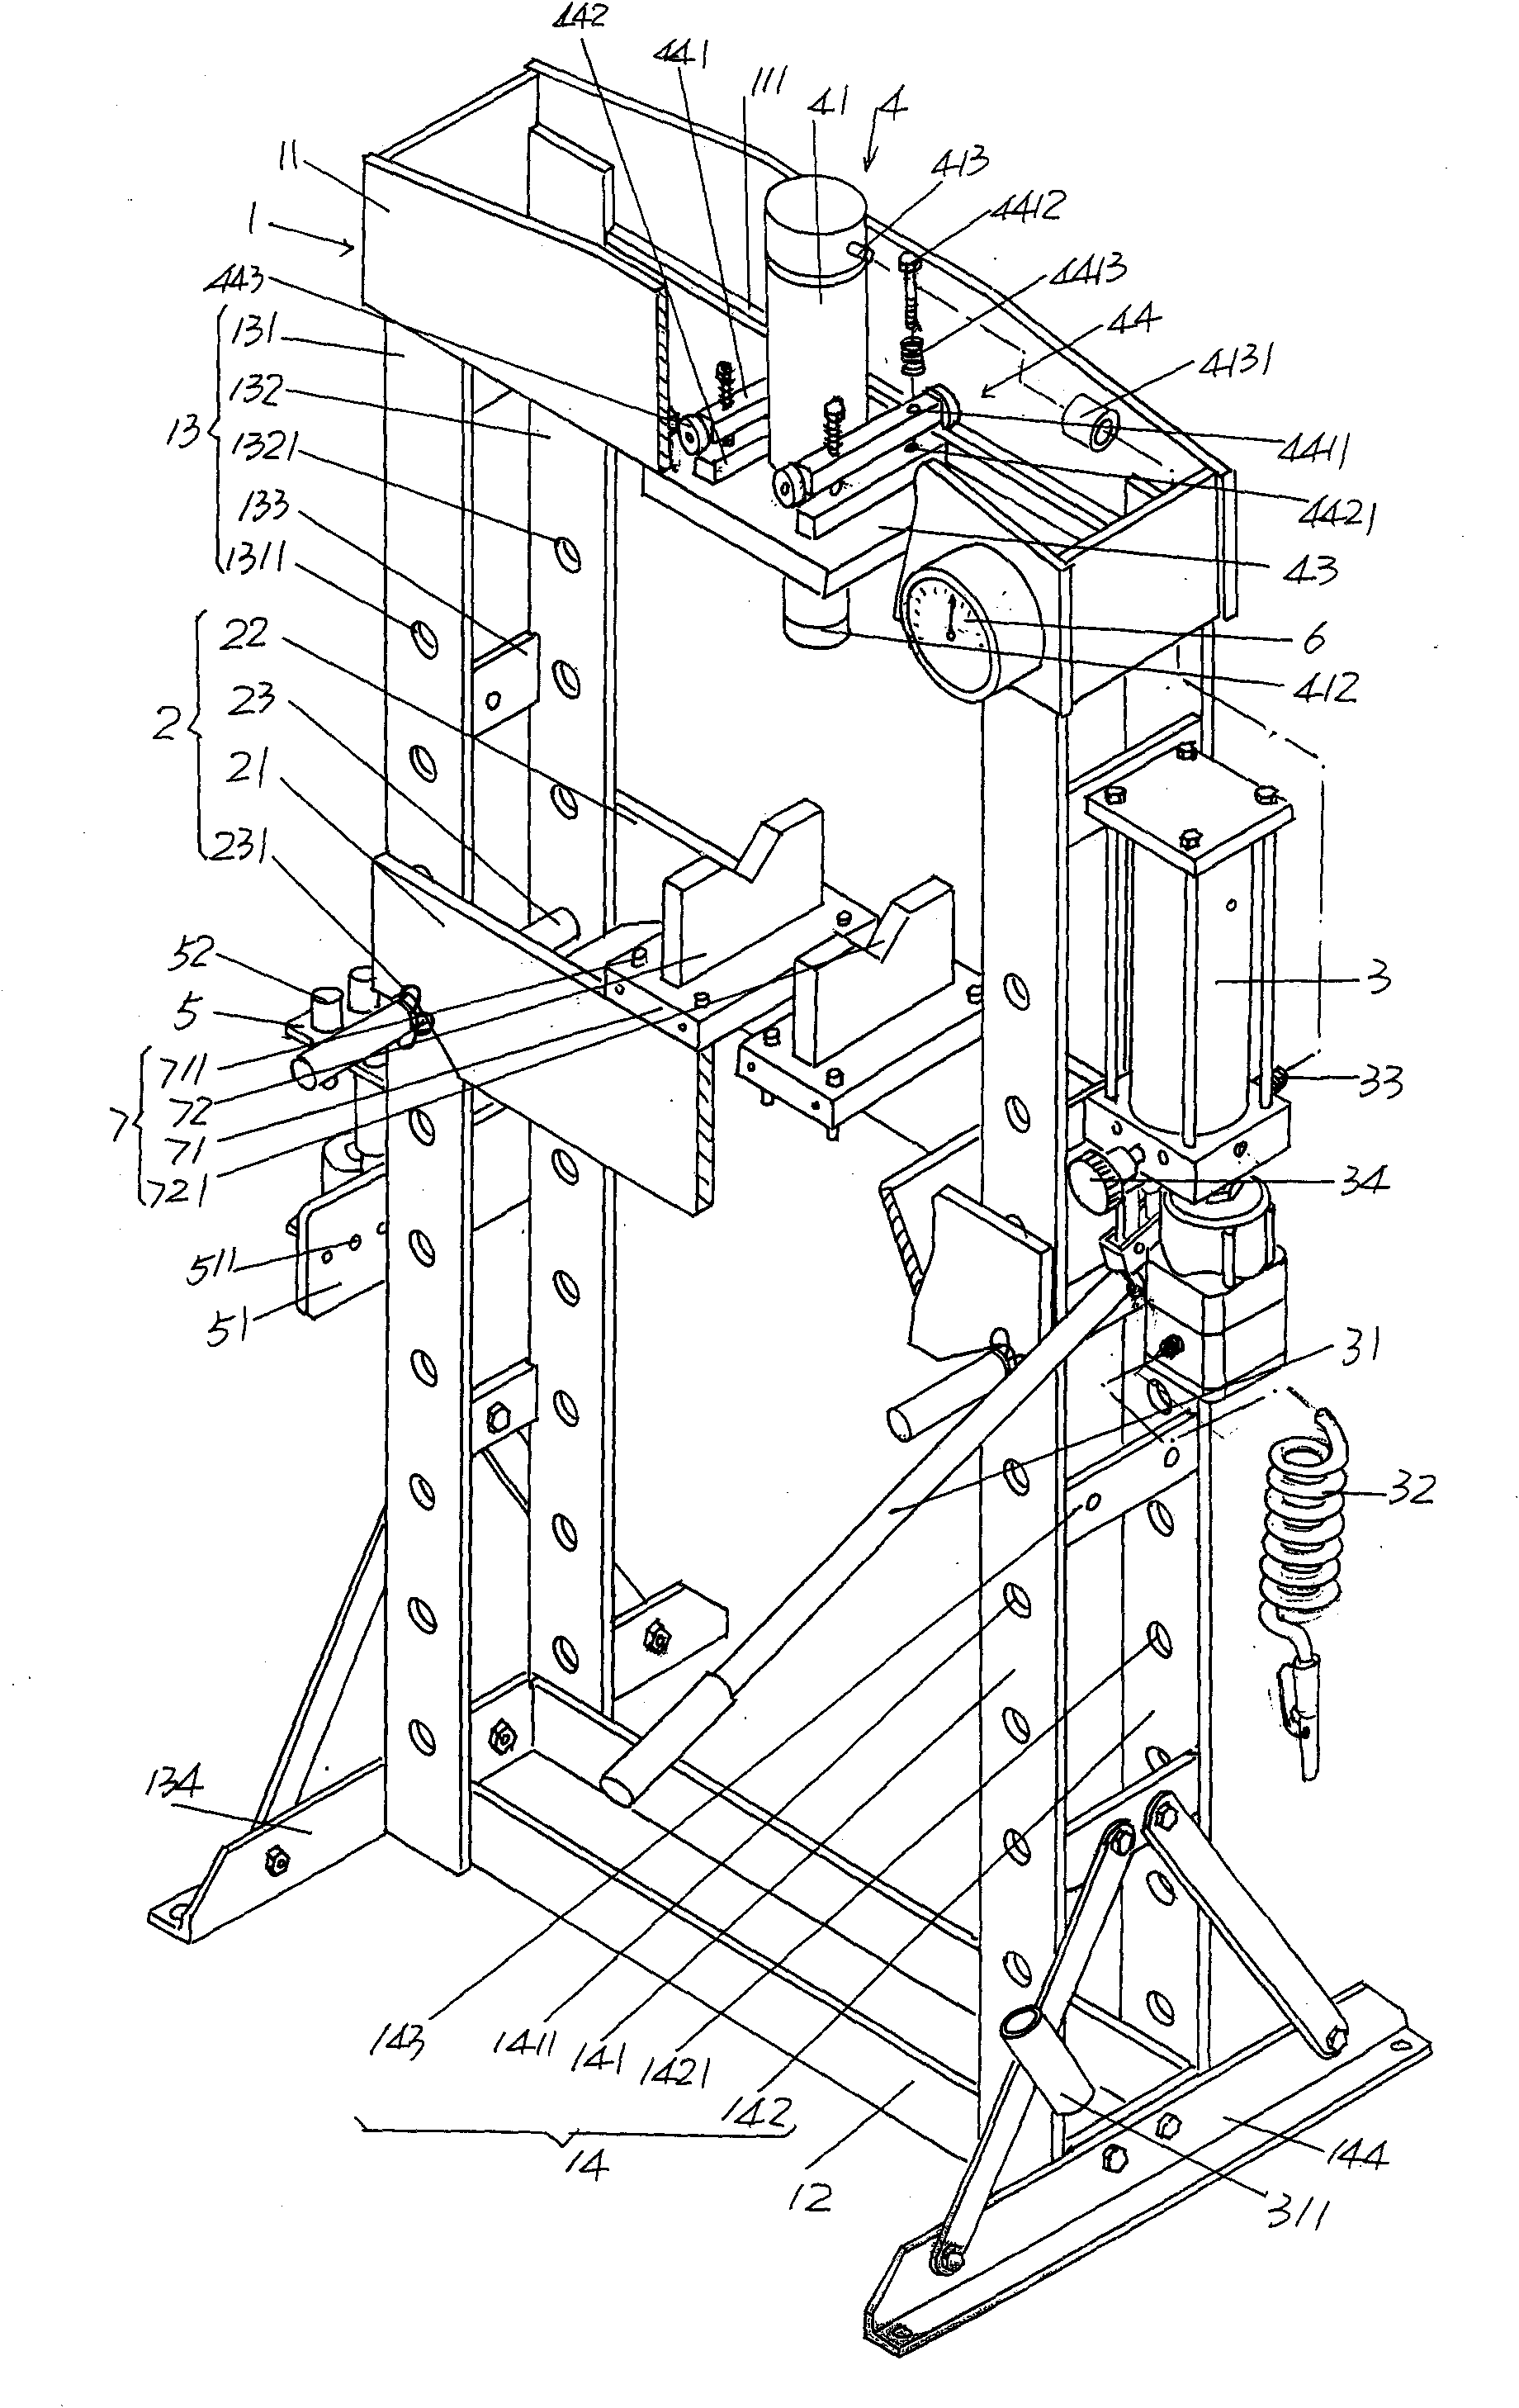 Jack hydraulic press